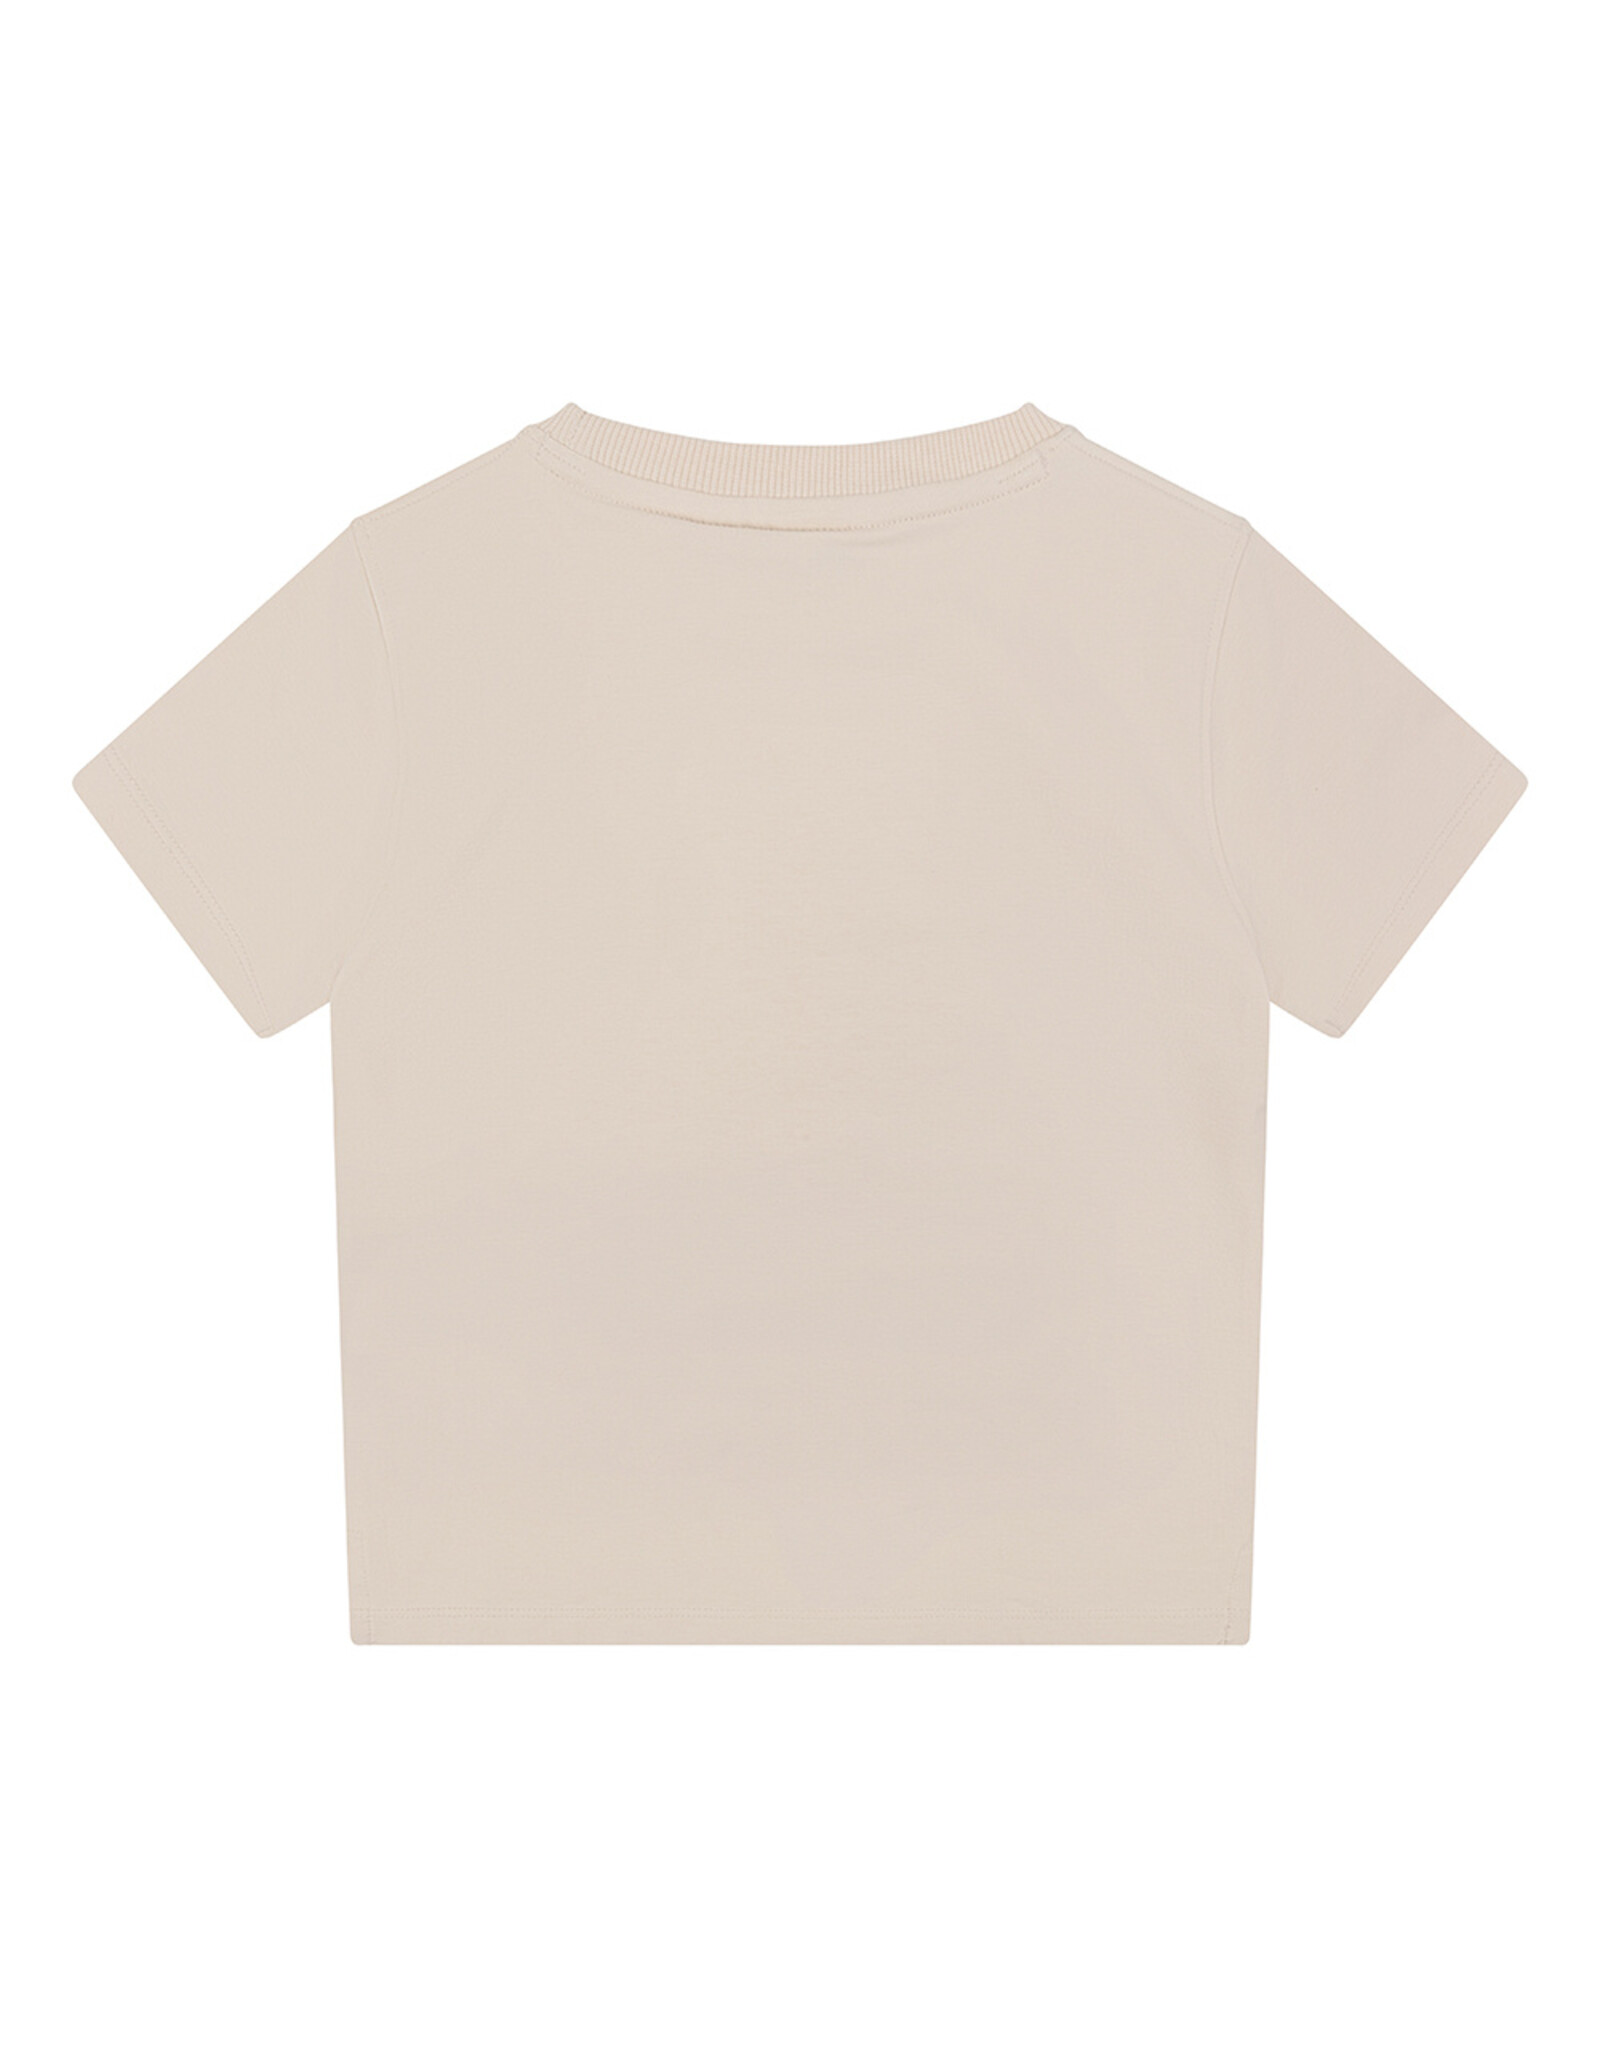 Daily7 Eco T-Shirt D7 Sandshell-910